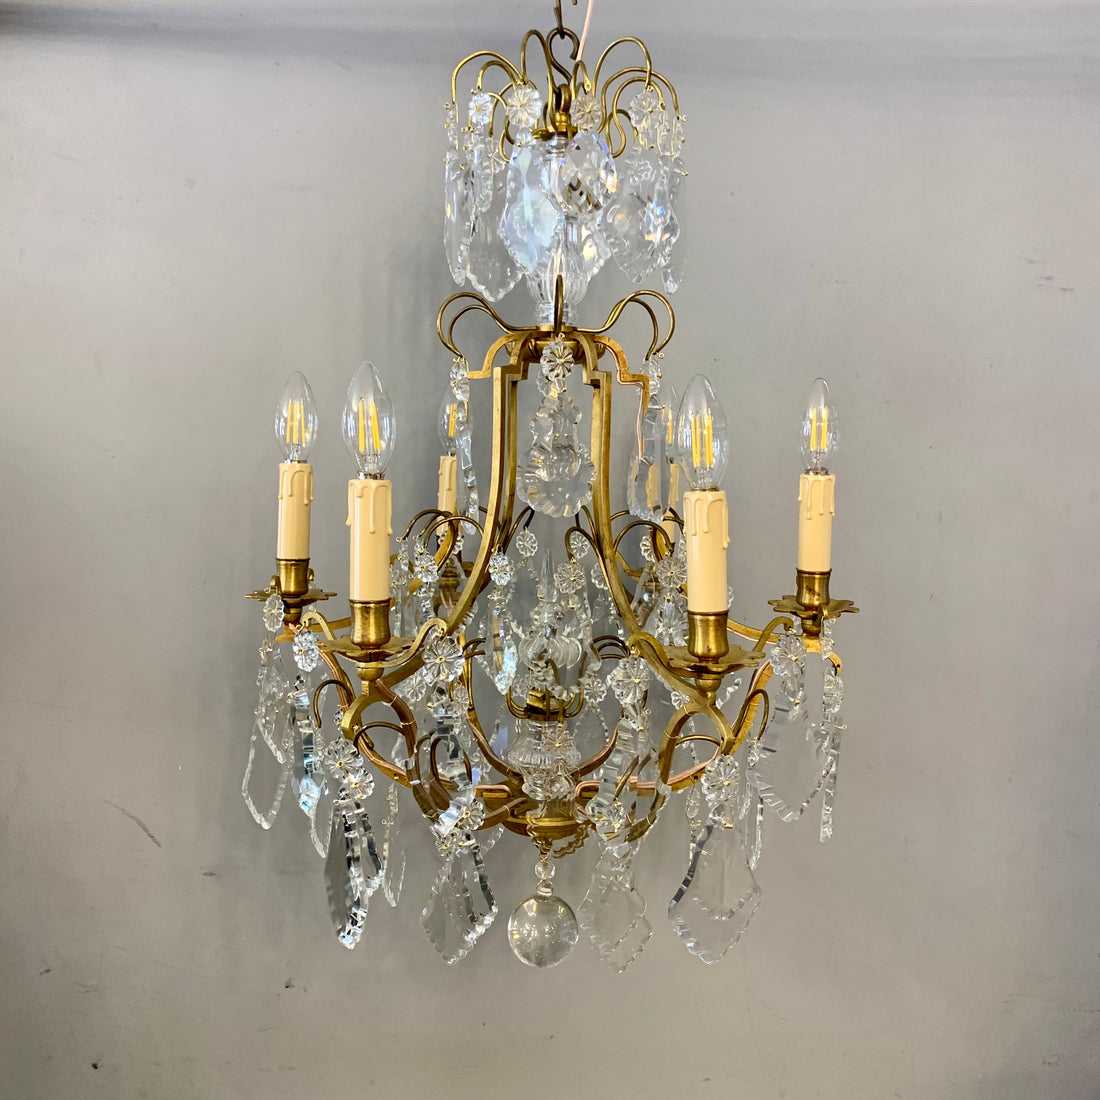 Lámpara francesa de lagrimas estilo Luis XVI. SXIX